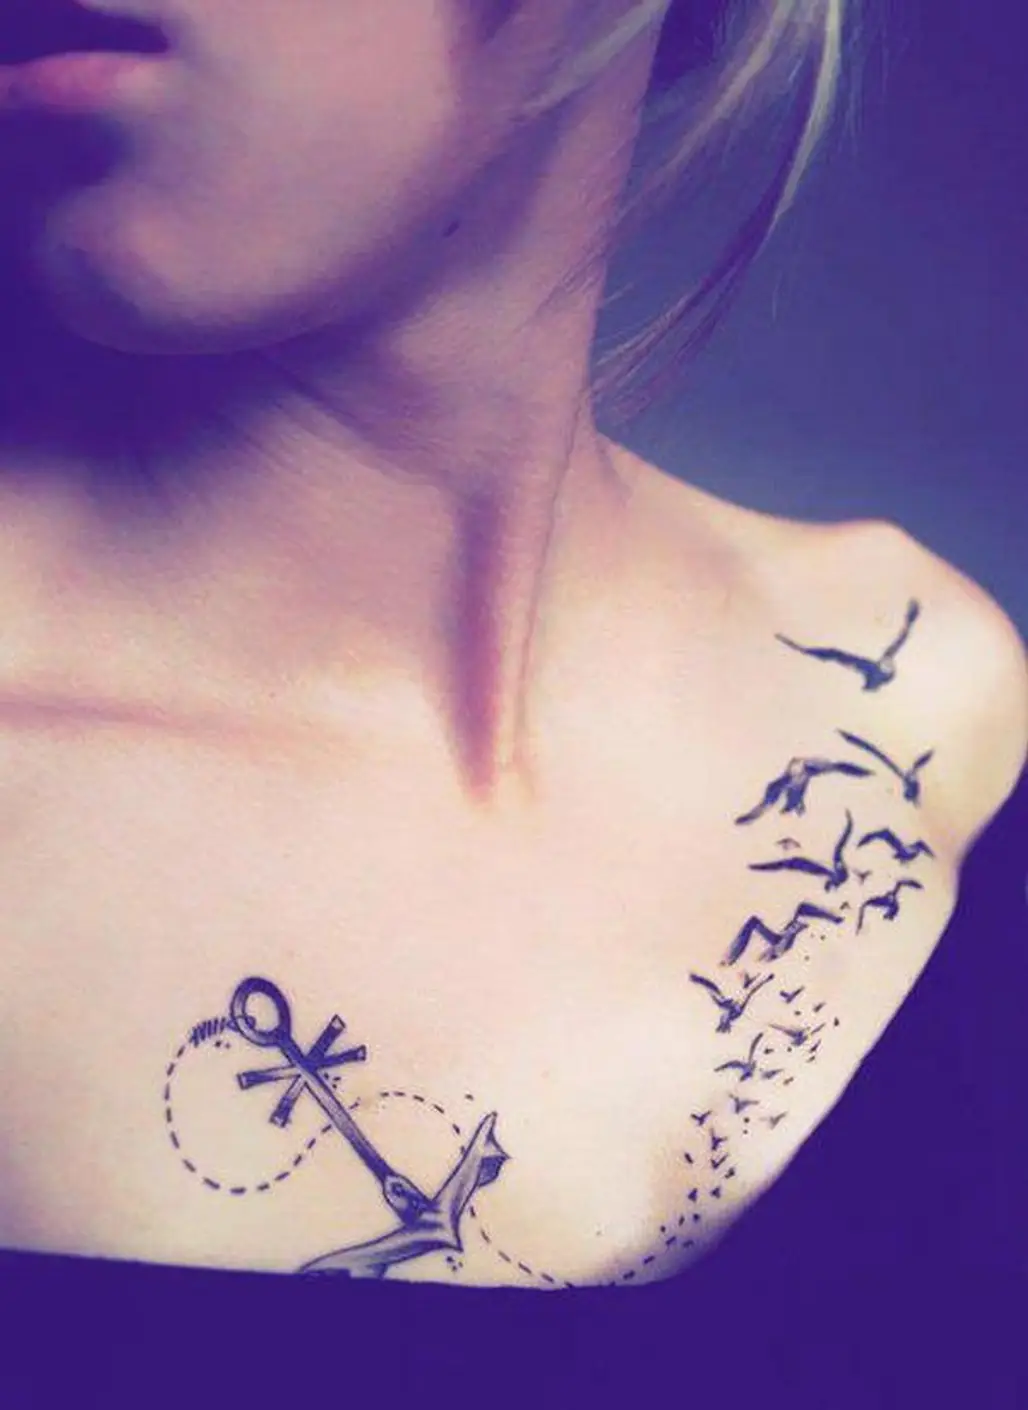 blue,arm,tattoo,organ,hand,